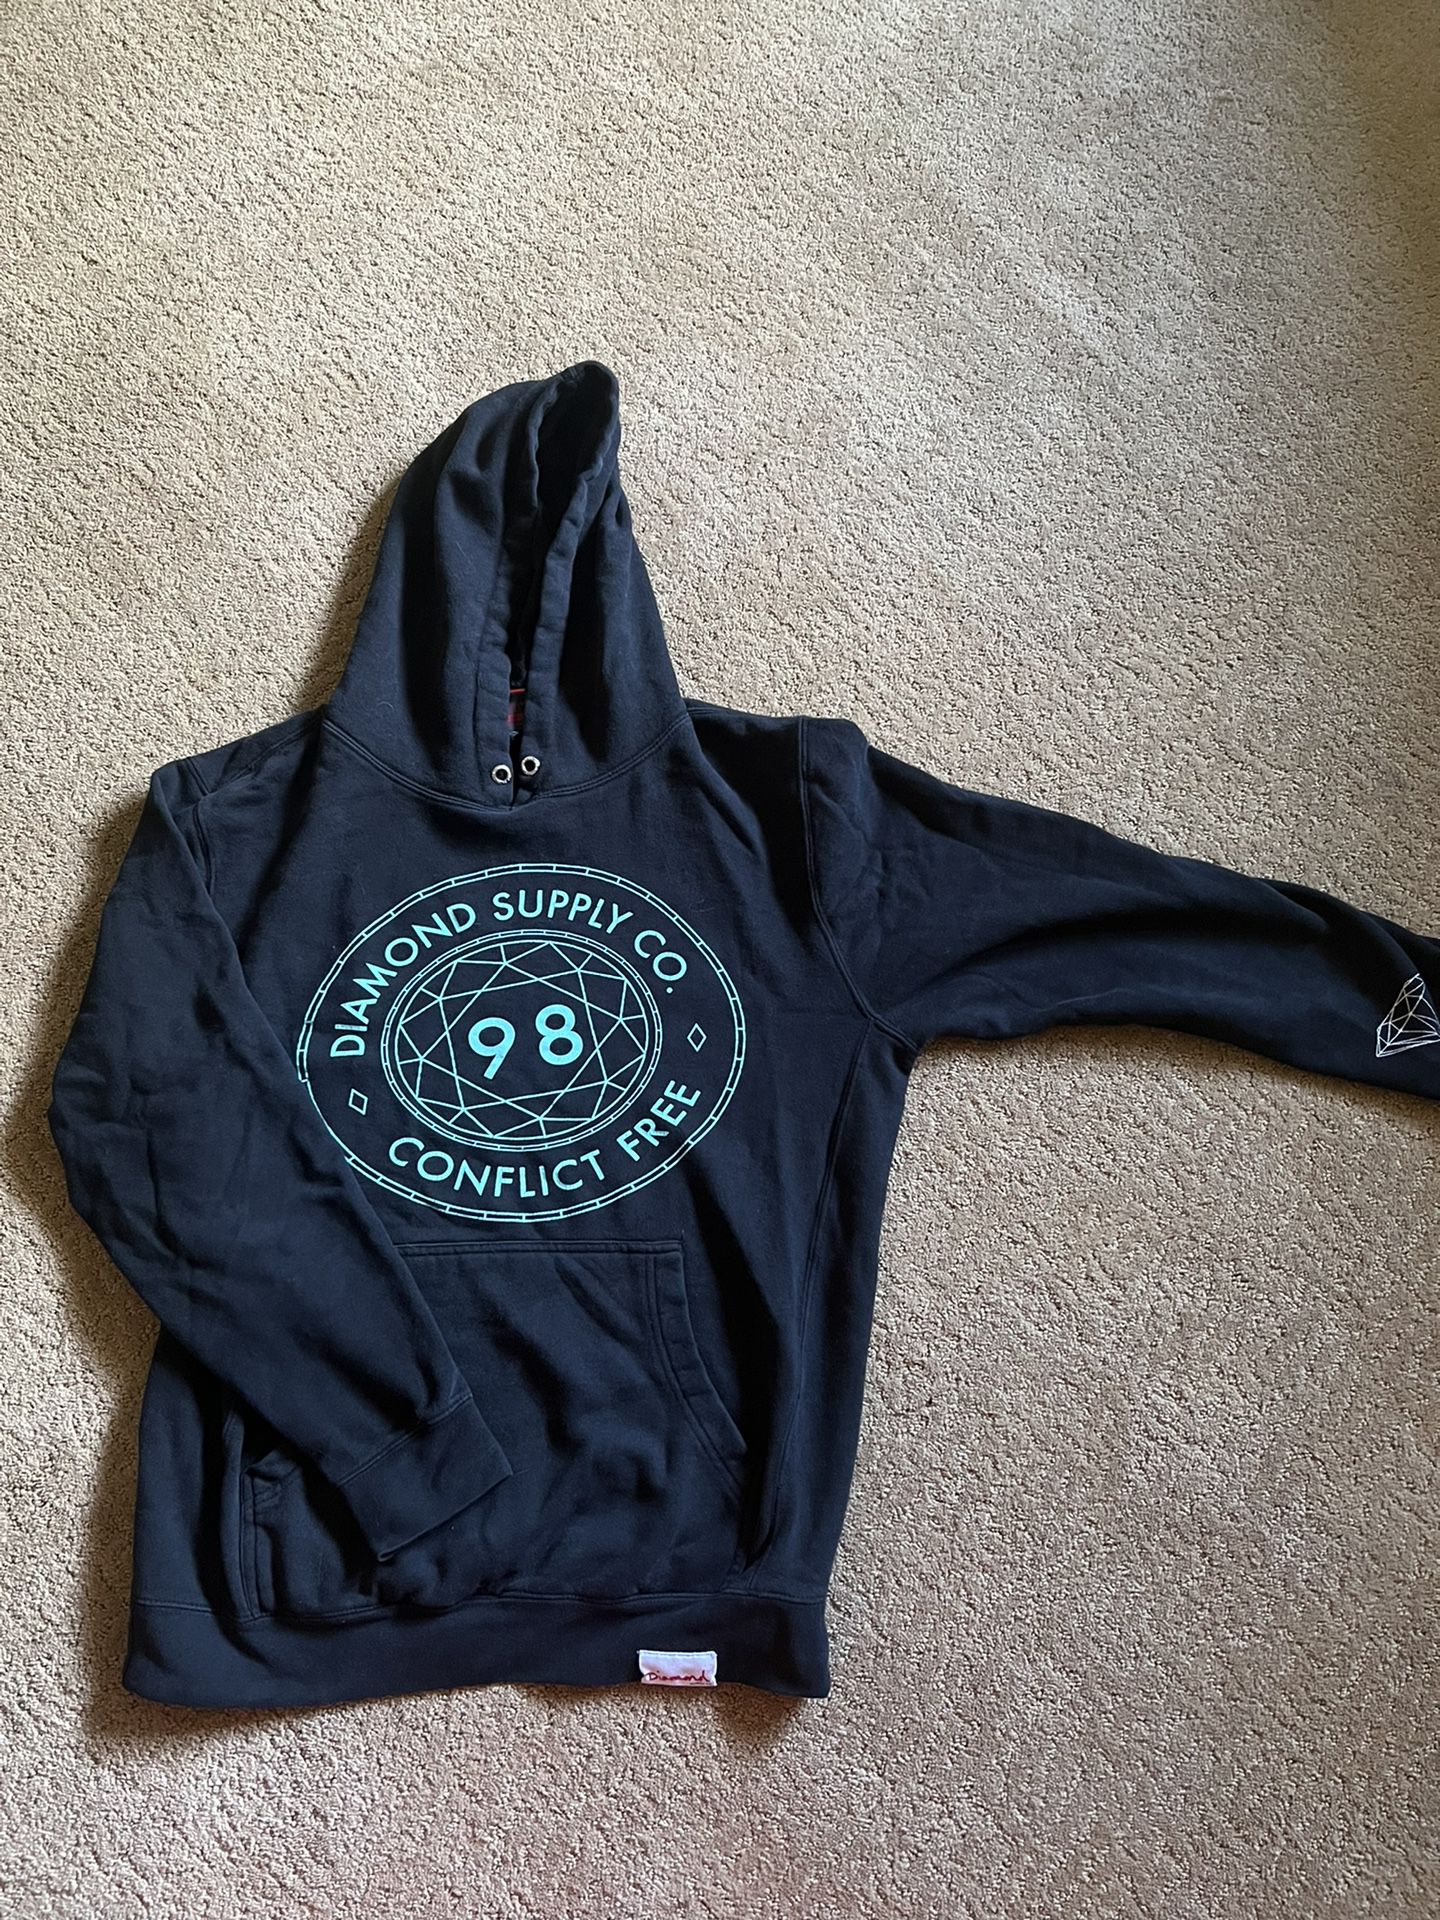 Diamond Supply Co. 98 Conflict Free Men's Medium Black Hoodie Sweatshirt